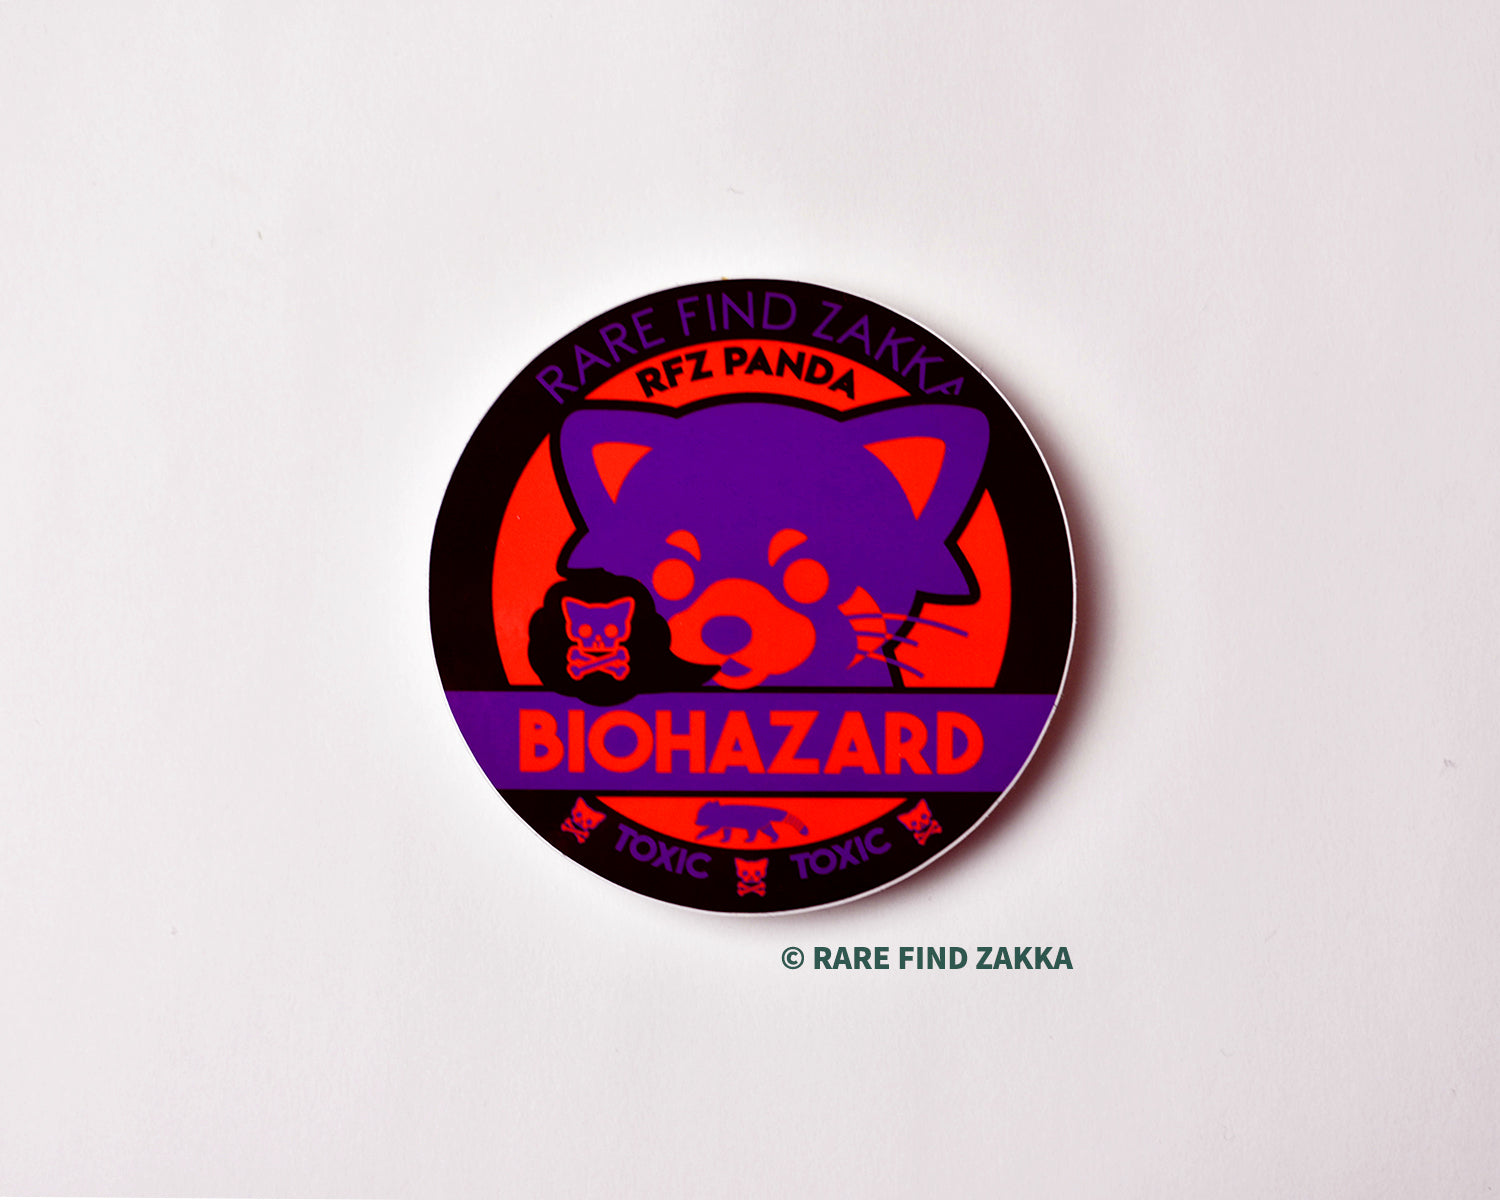 Purple red red panda round black sticker that says biohazard and toxic bones